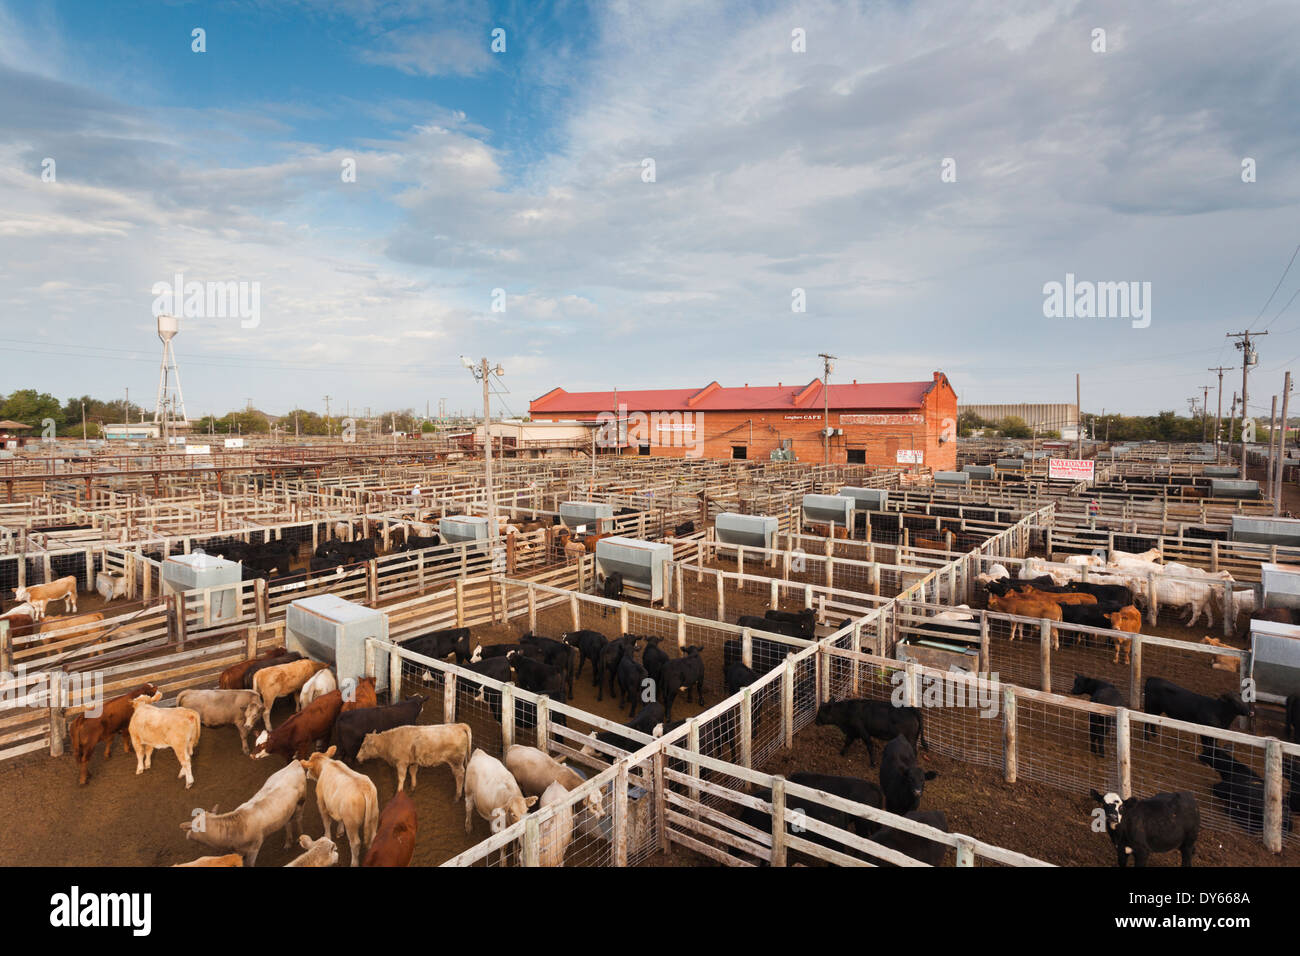 USA, Oklahoma, Oklahoma City, Oklahoma National Stockyards, elevated view of cattle pens Stock Photo